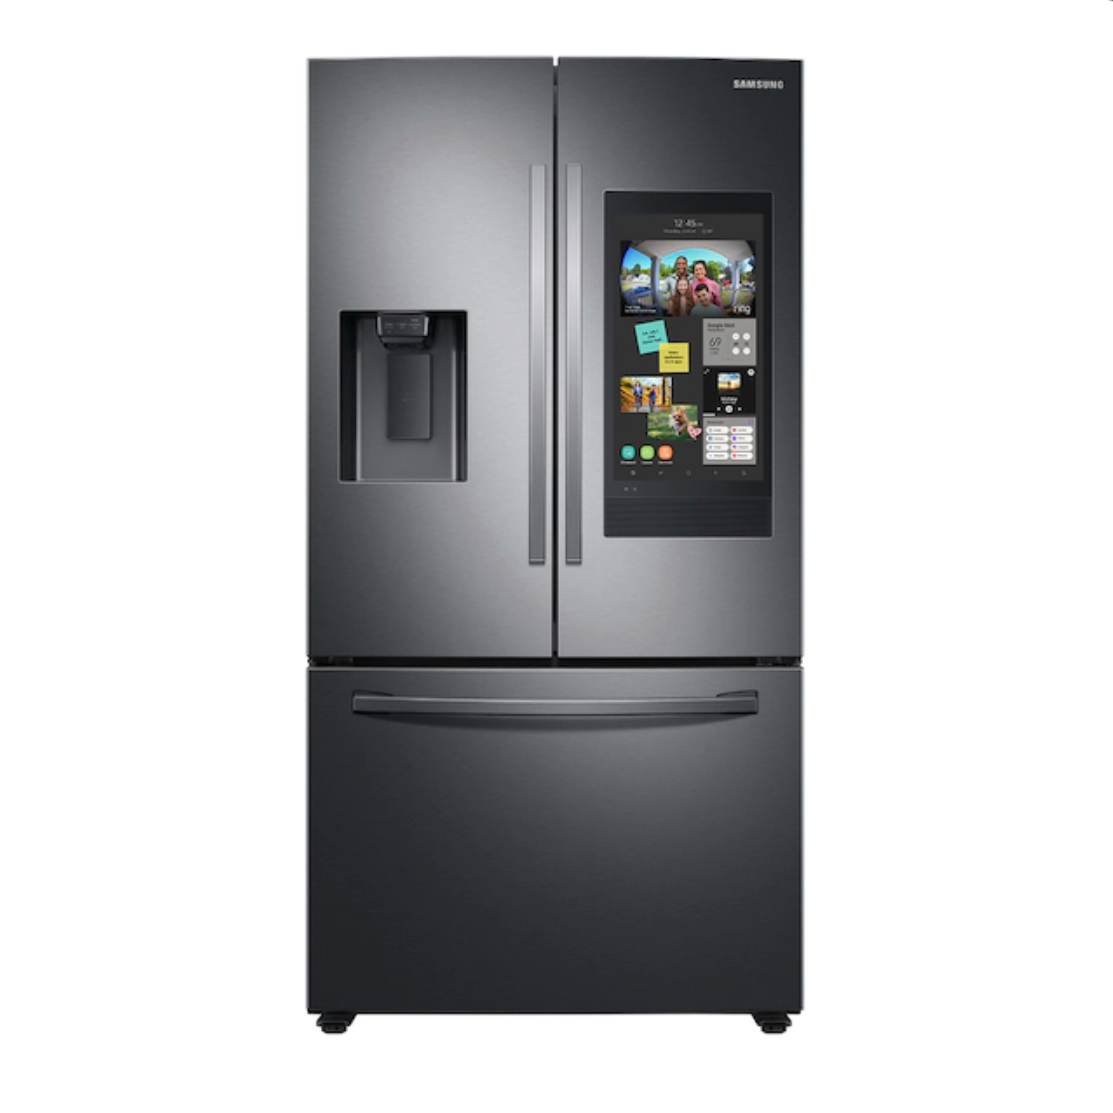 26.5 cu. ft. Large Capacity 3-Door French Door Refrigerator with Family Hub